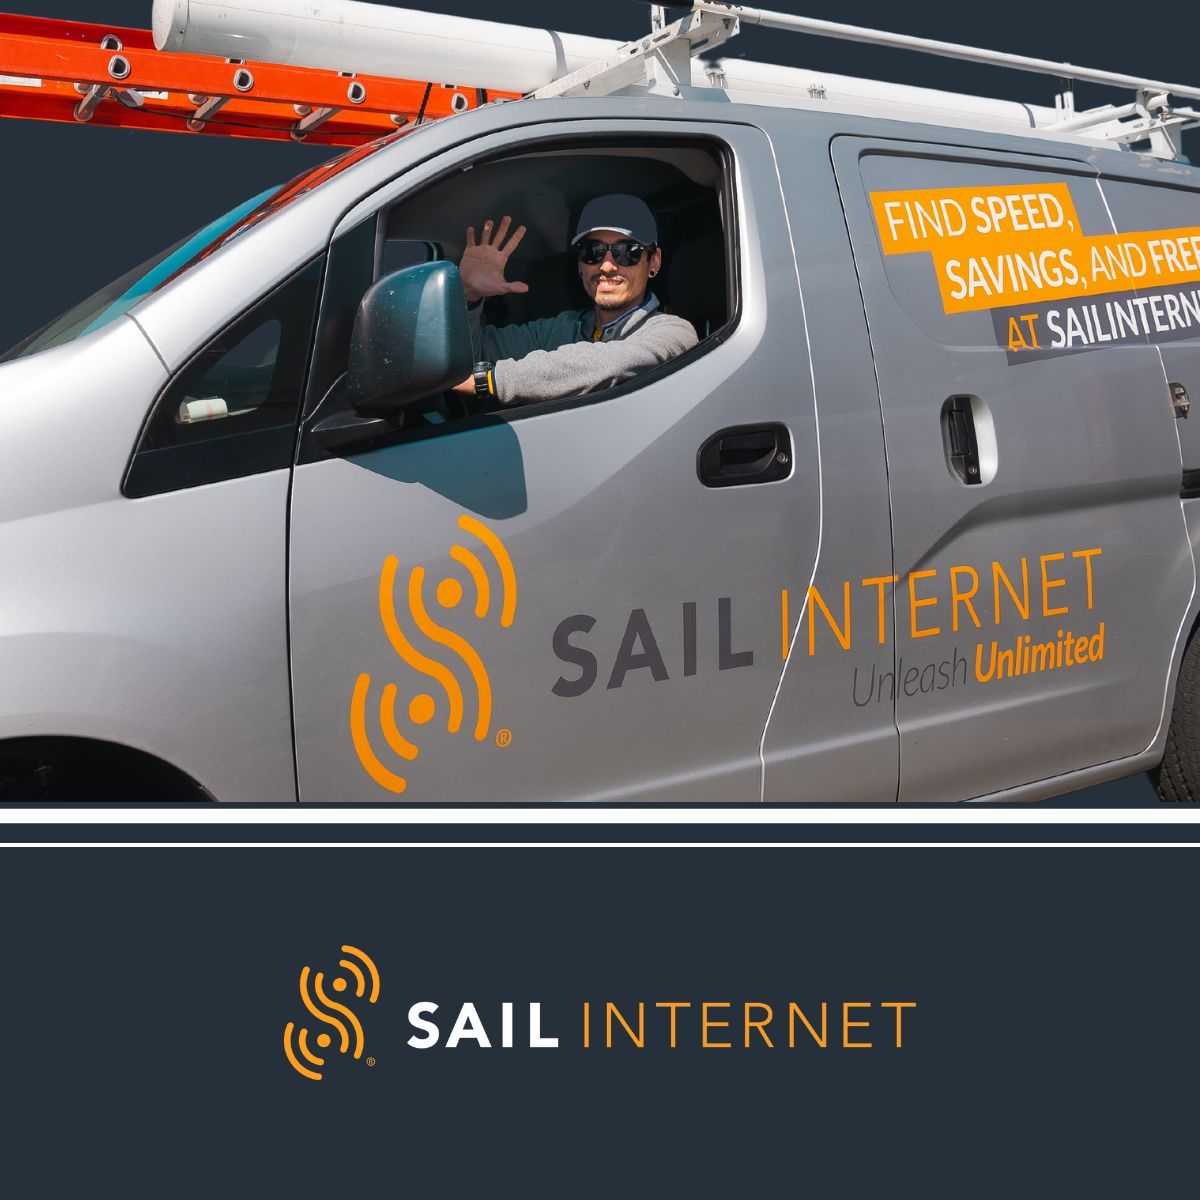 sail internet outage